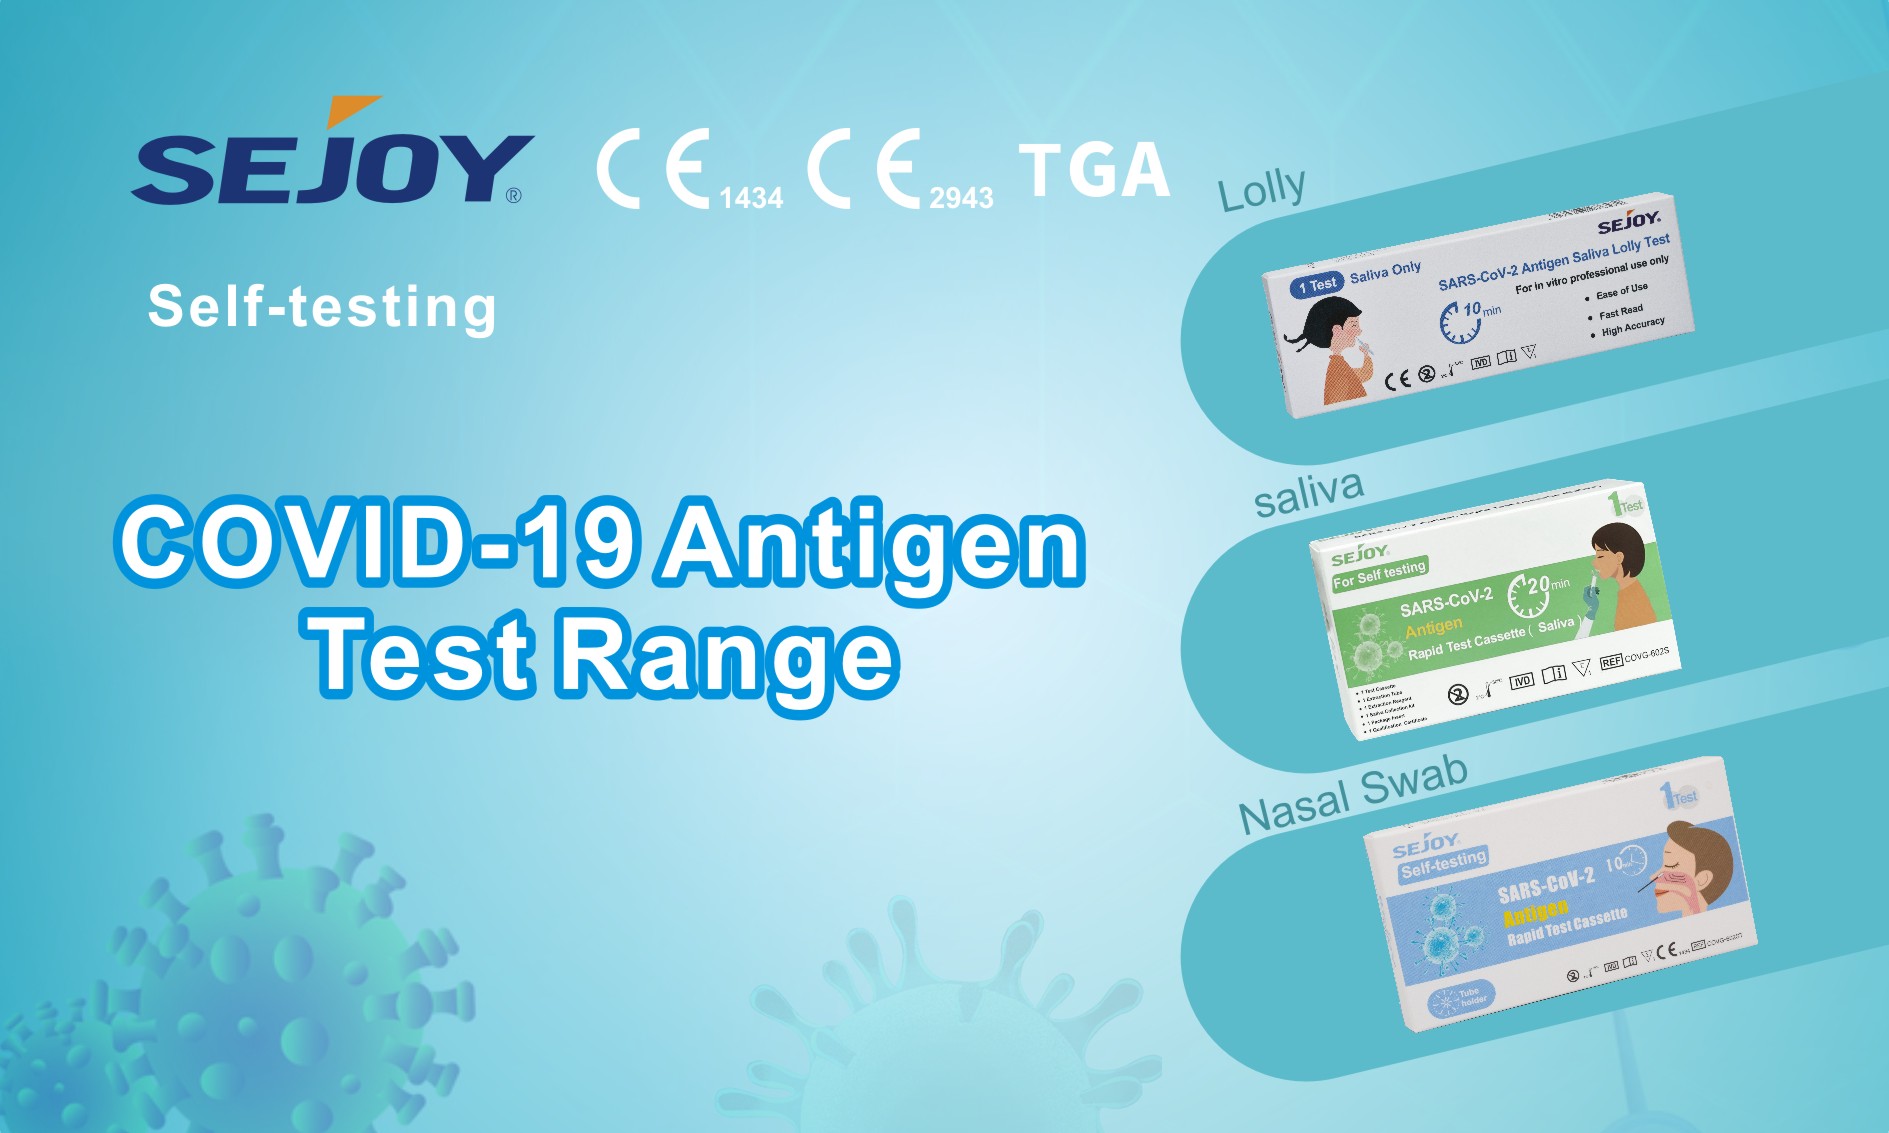 http://sejoy.com/covid-19-antigen-test-range-products/